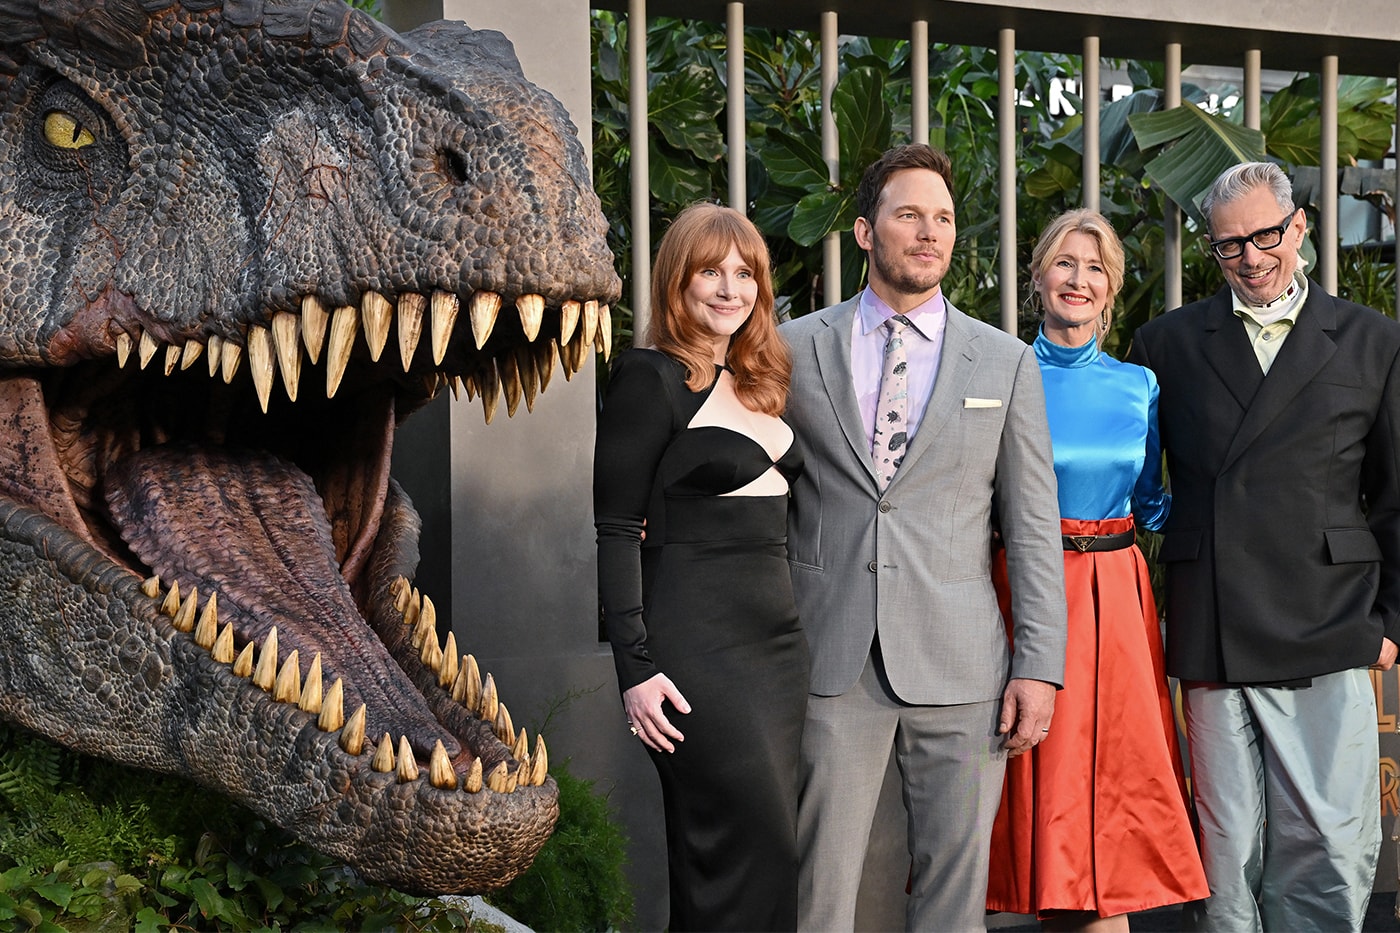 Jurassic World Dominion 143 million USD opening weekend box office